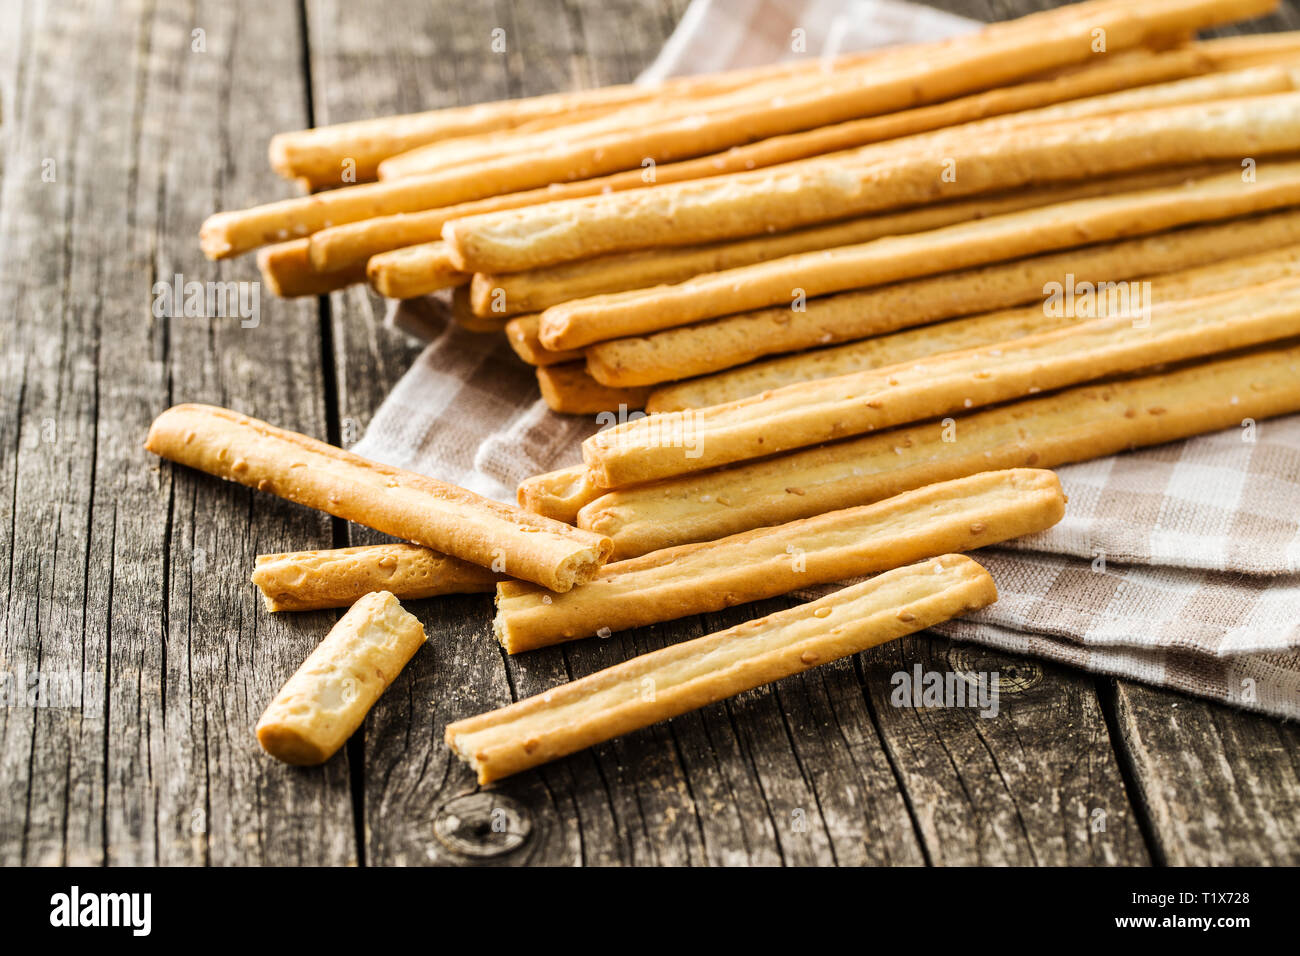 Italian grissini breadsticks. Tasty old Photo table wooden - snack grissini on Stock Alamy